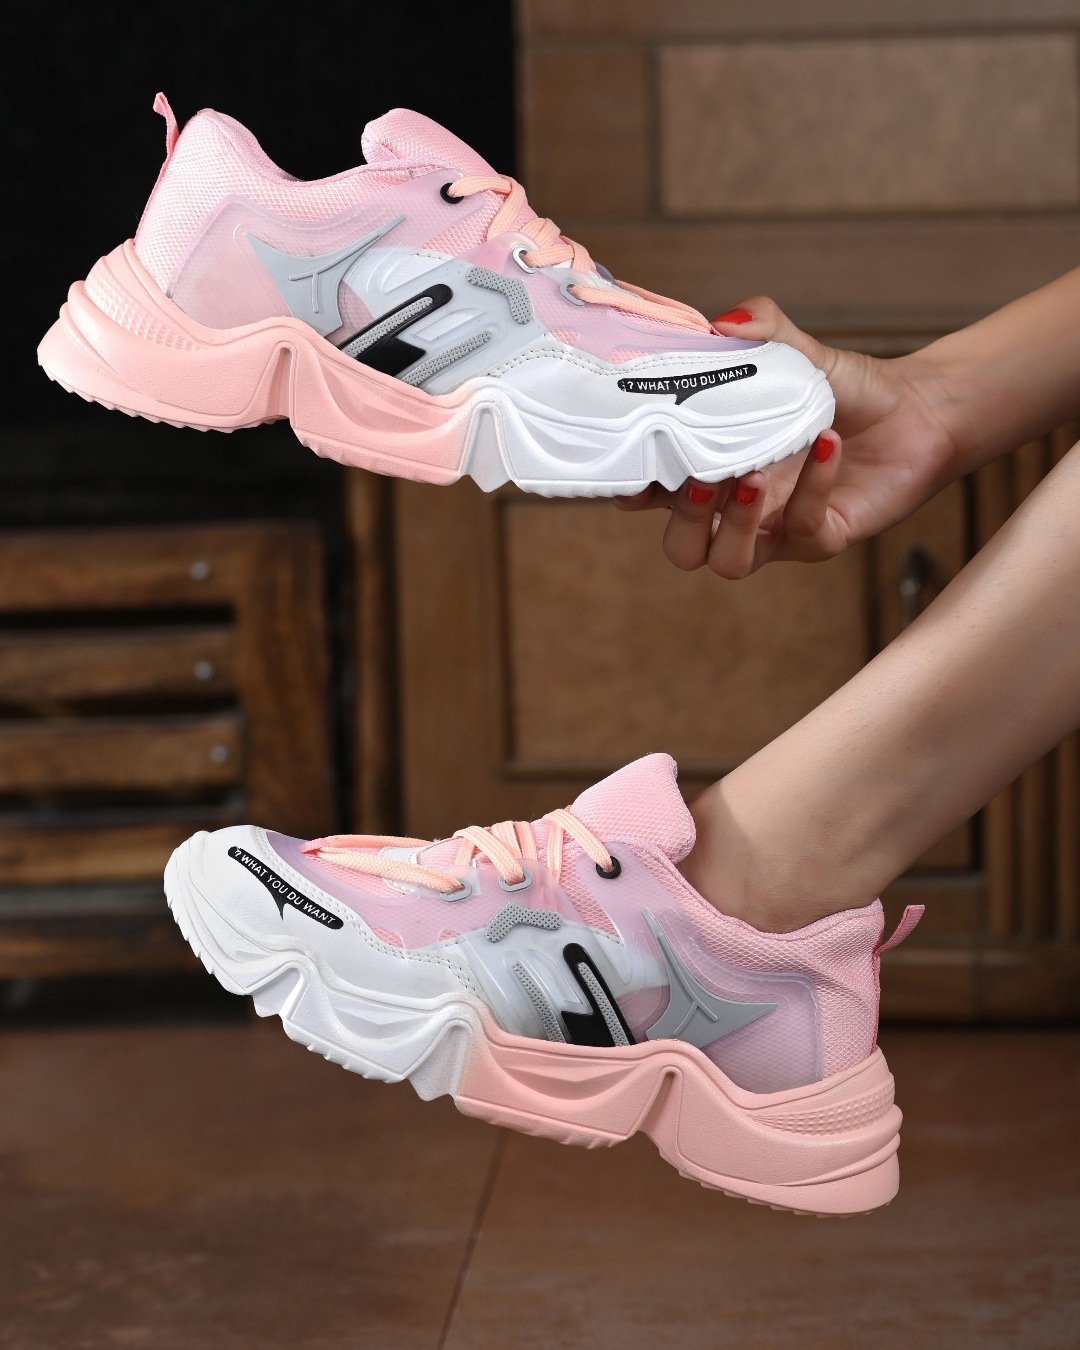 Buy Skechers-Girls-S-Lights Remix-Pink-Sneakers-UK 2 at Amazon.in